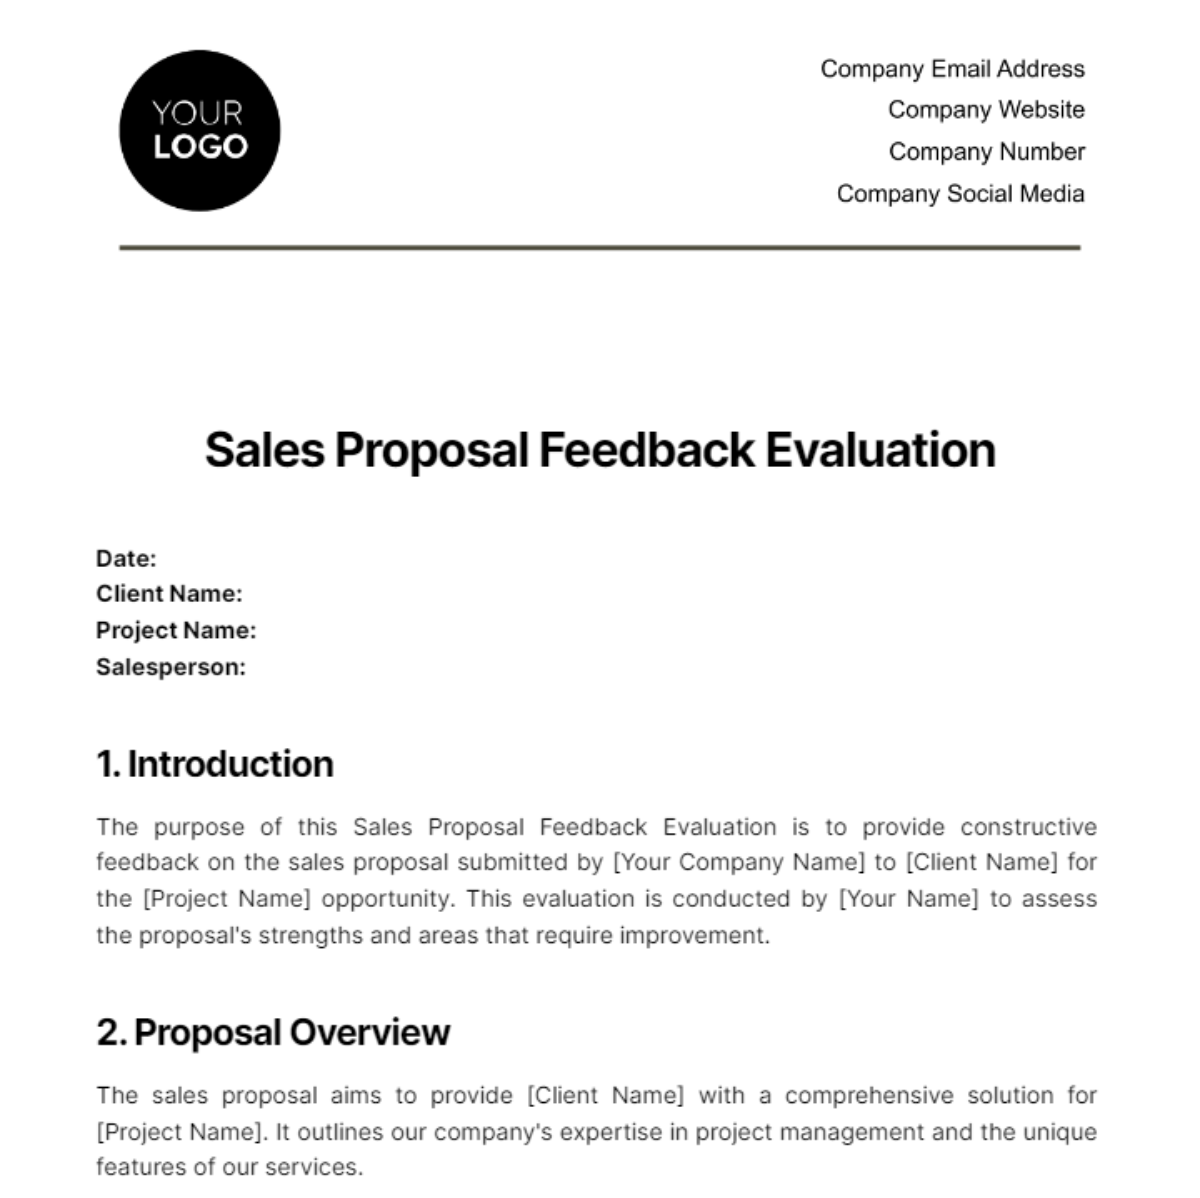 Sales Proposal Feedback Evaluation Template